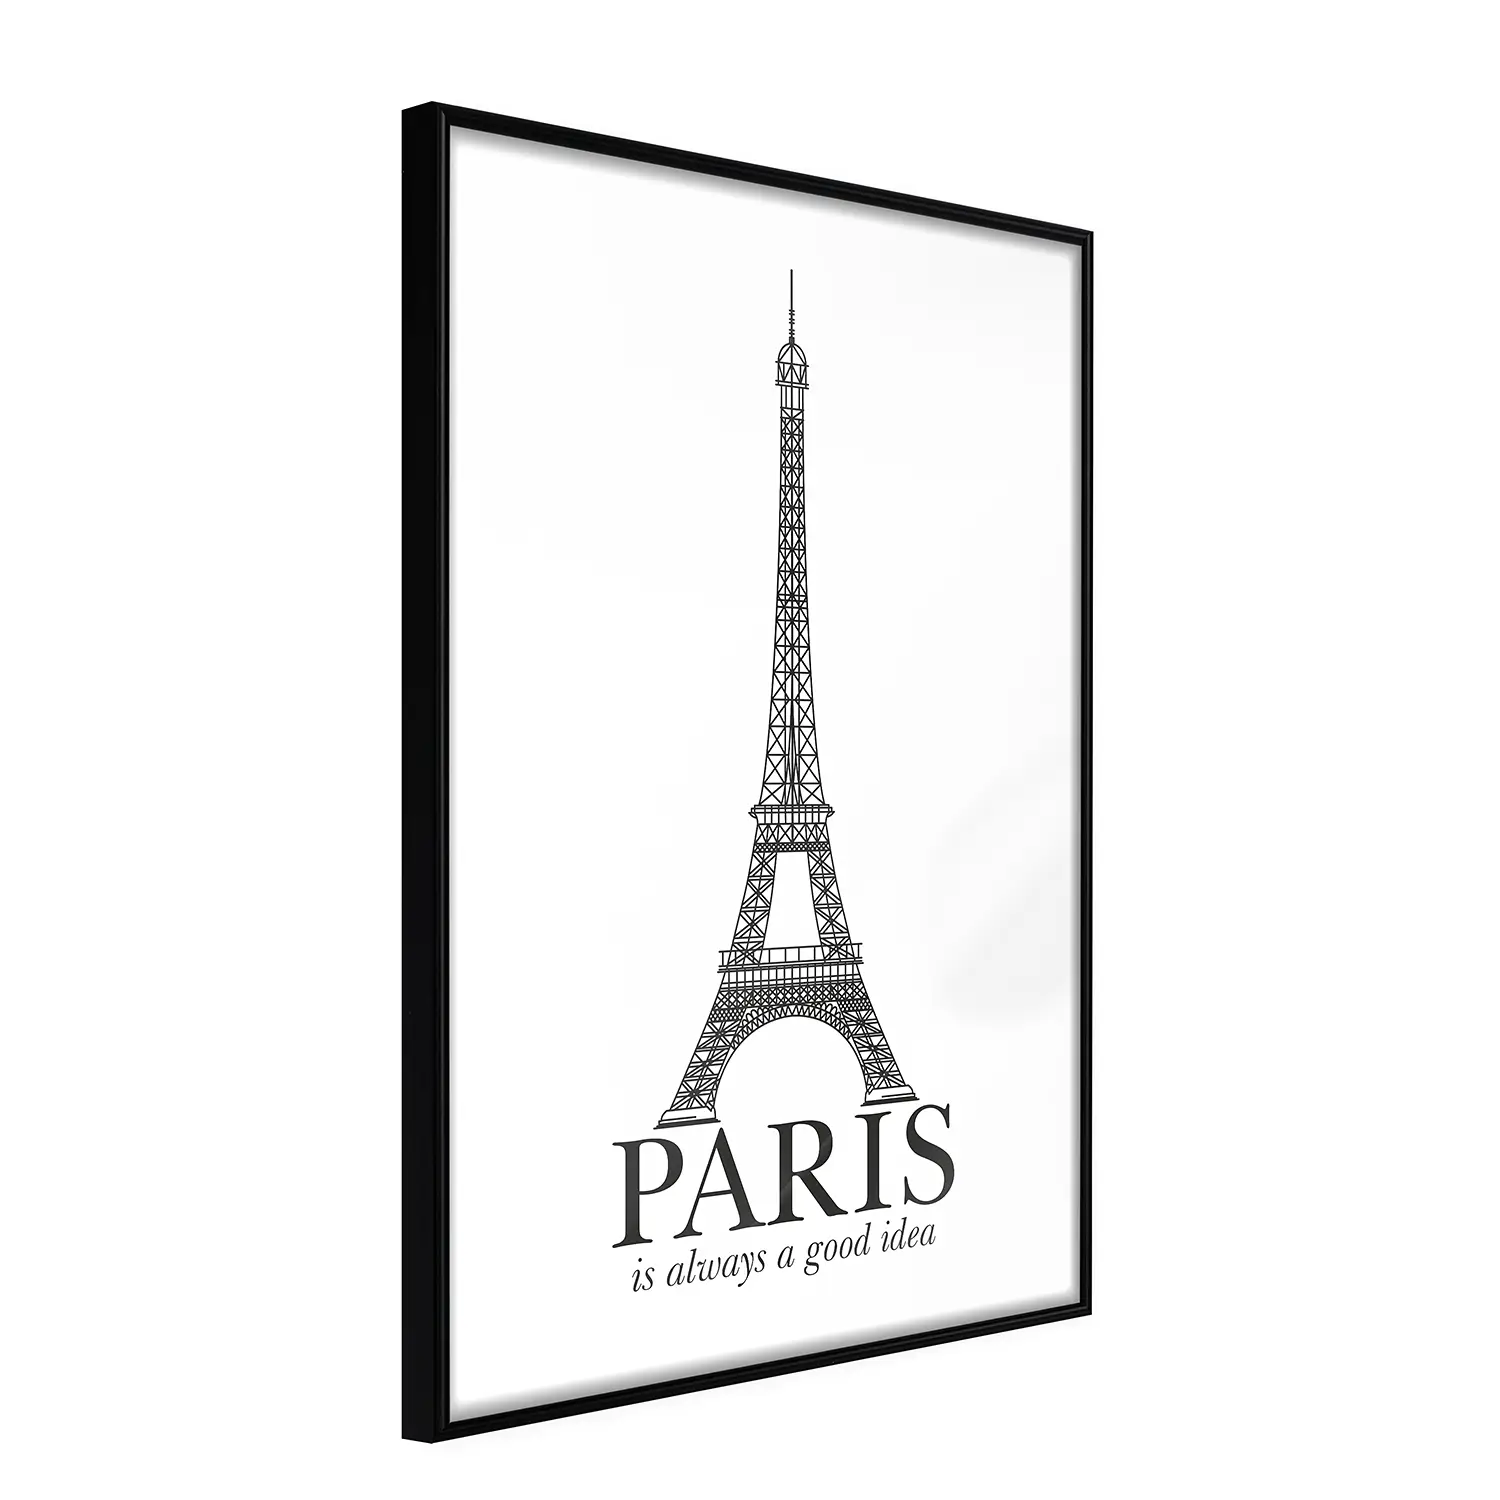 Poster Idea a Always Good Is Paris